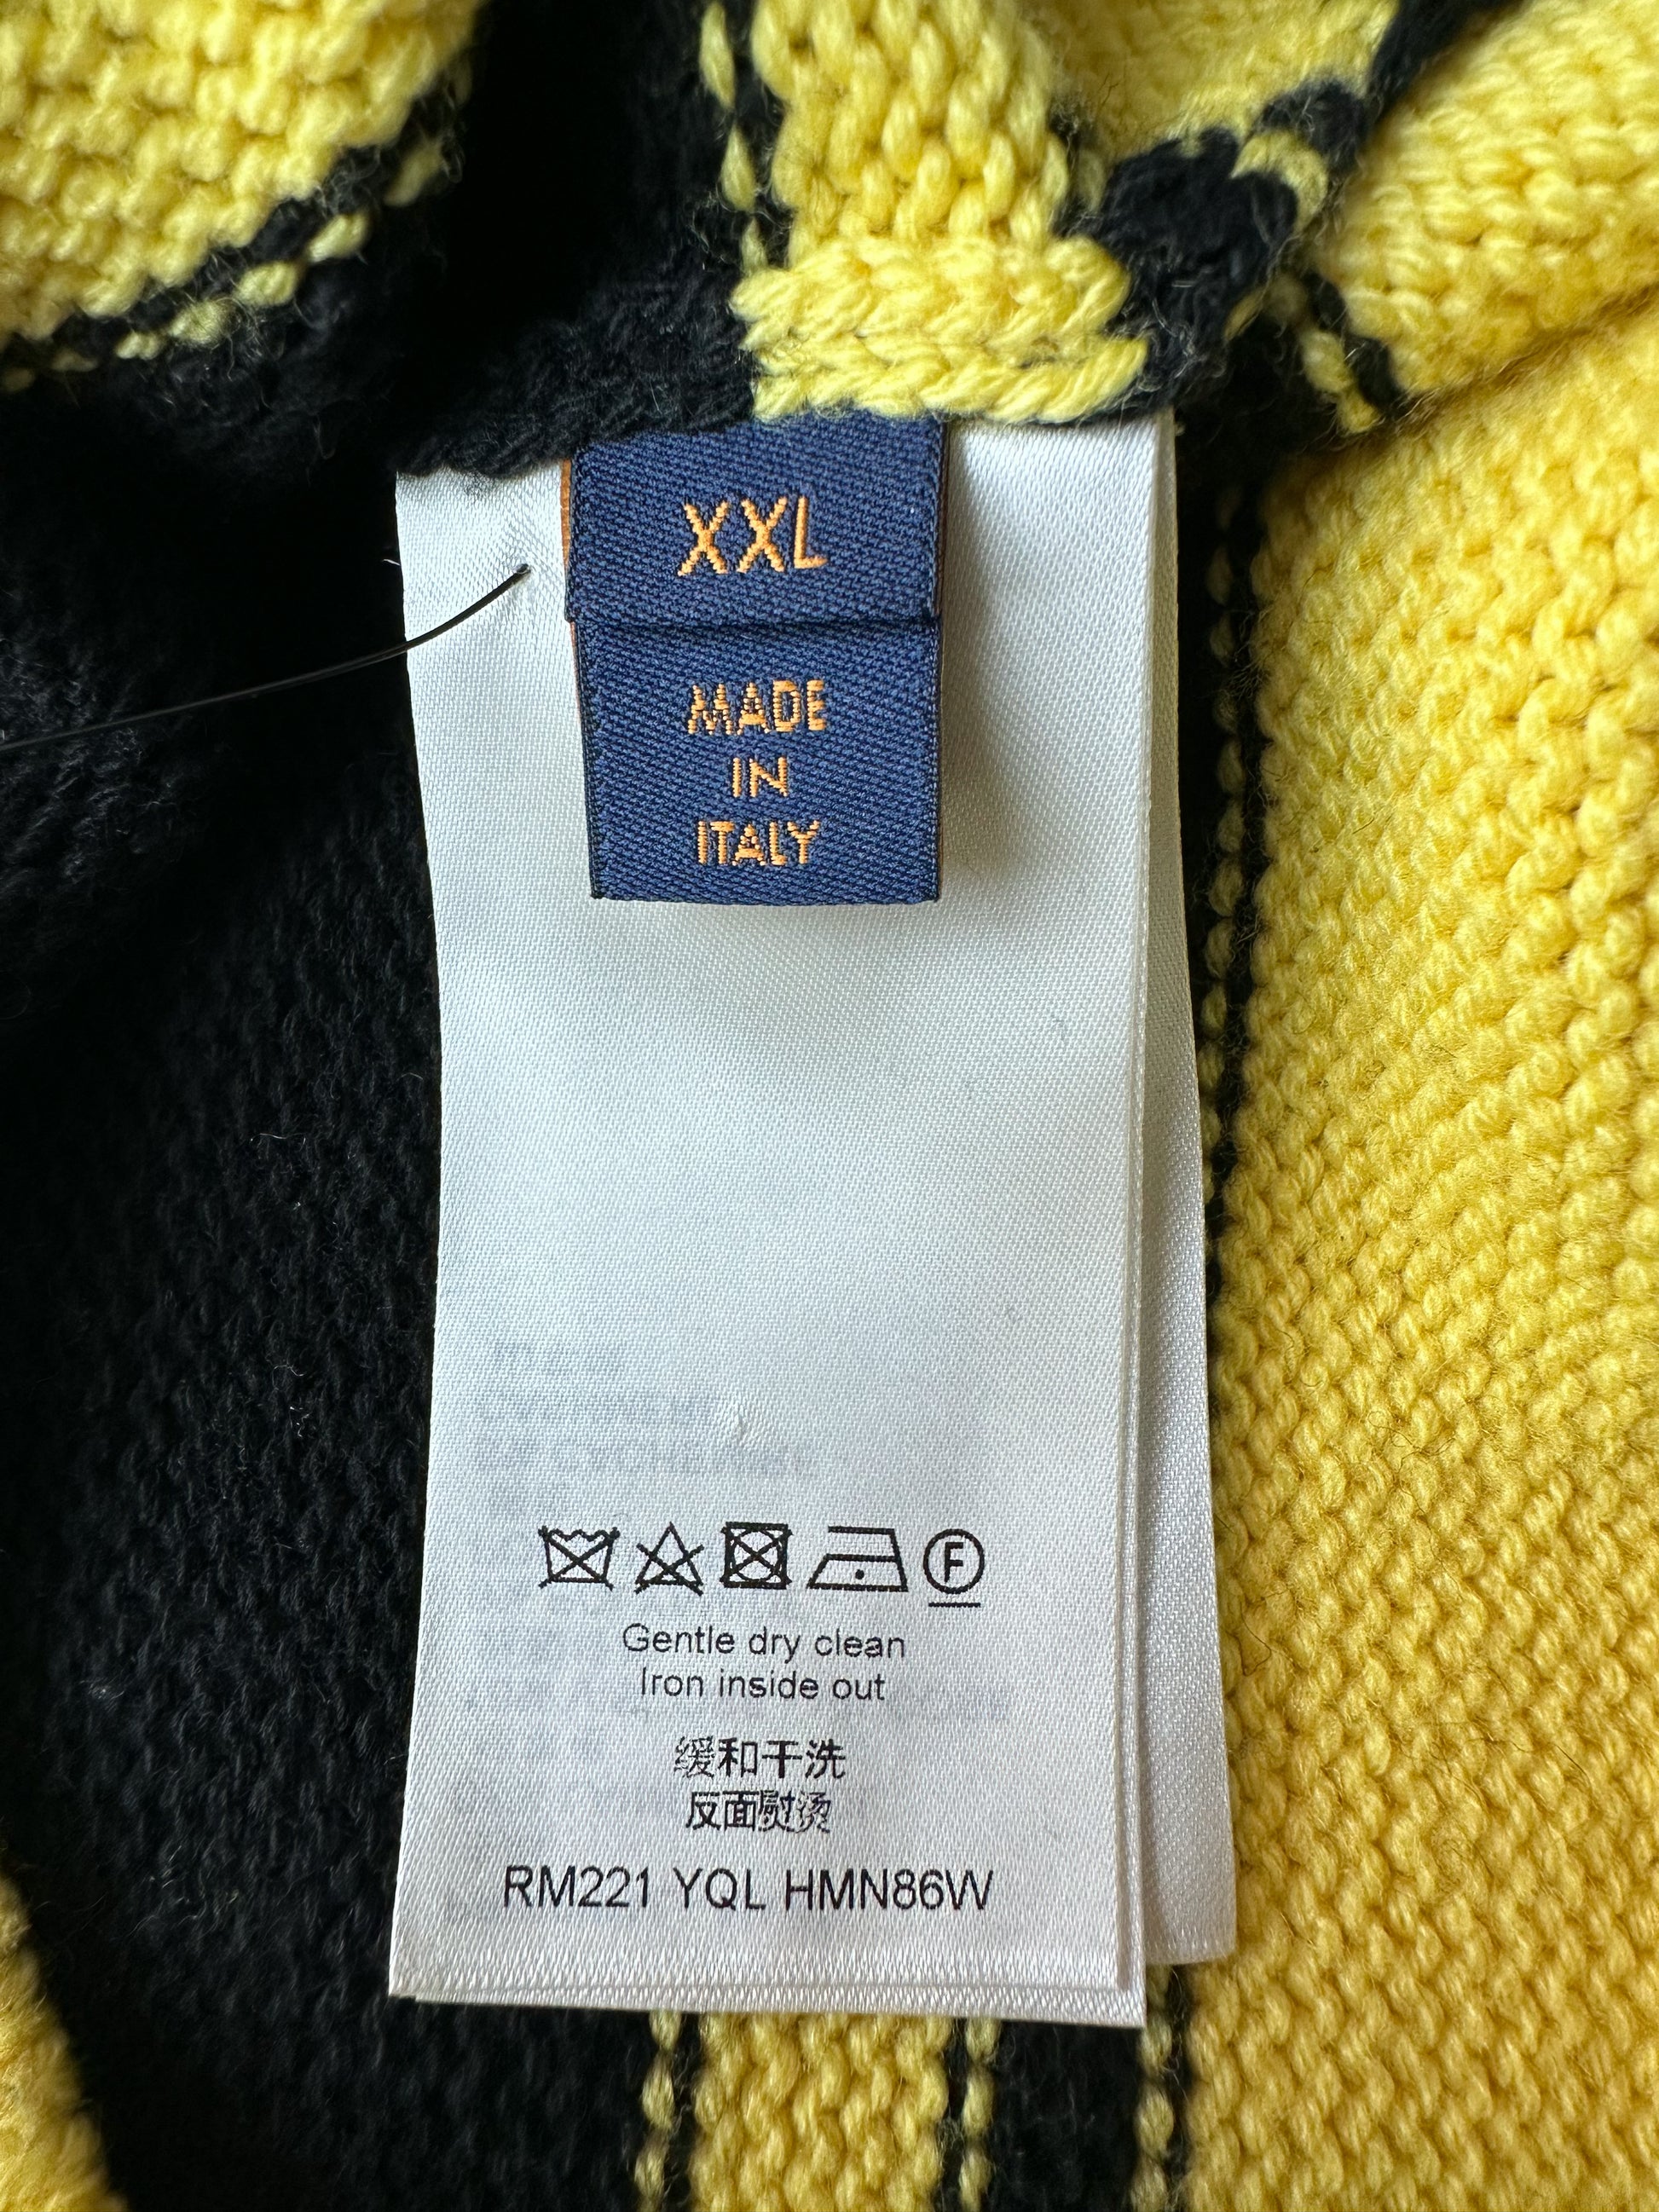 Louis Vuitton Monogram Logo Black and Yellow Knit Sweater Dress - L